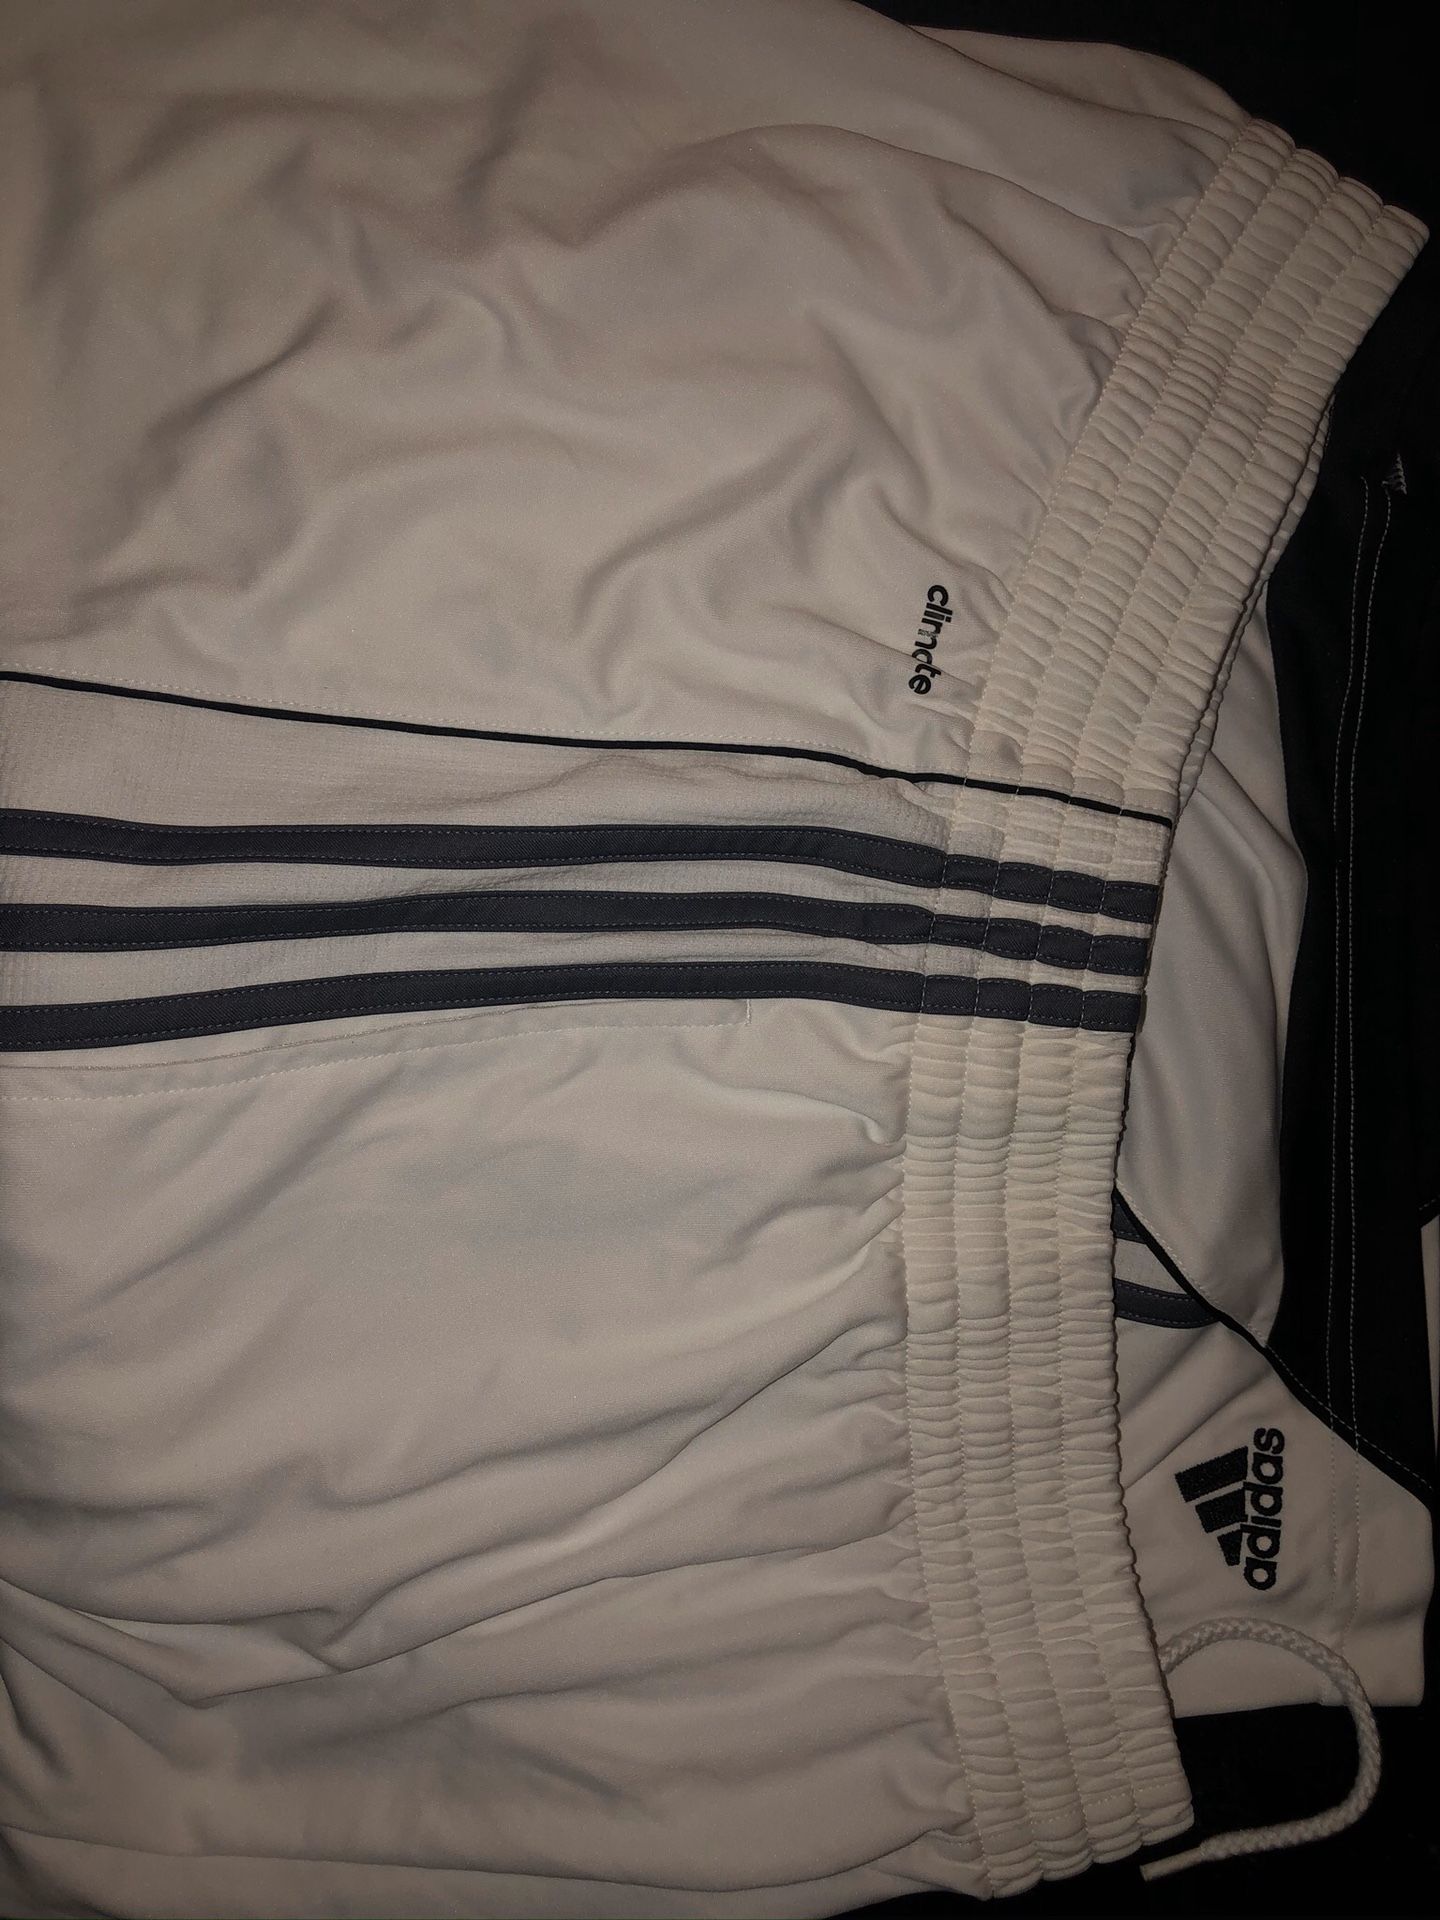 Adidas white shorts three stripes XL